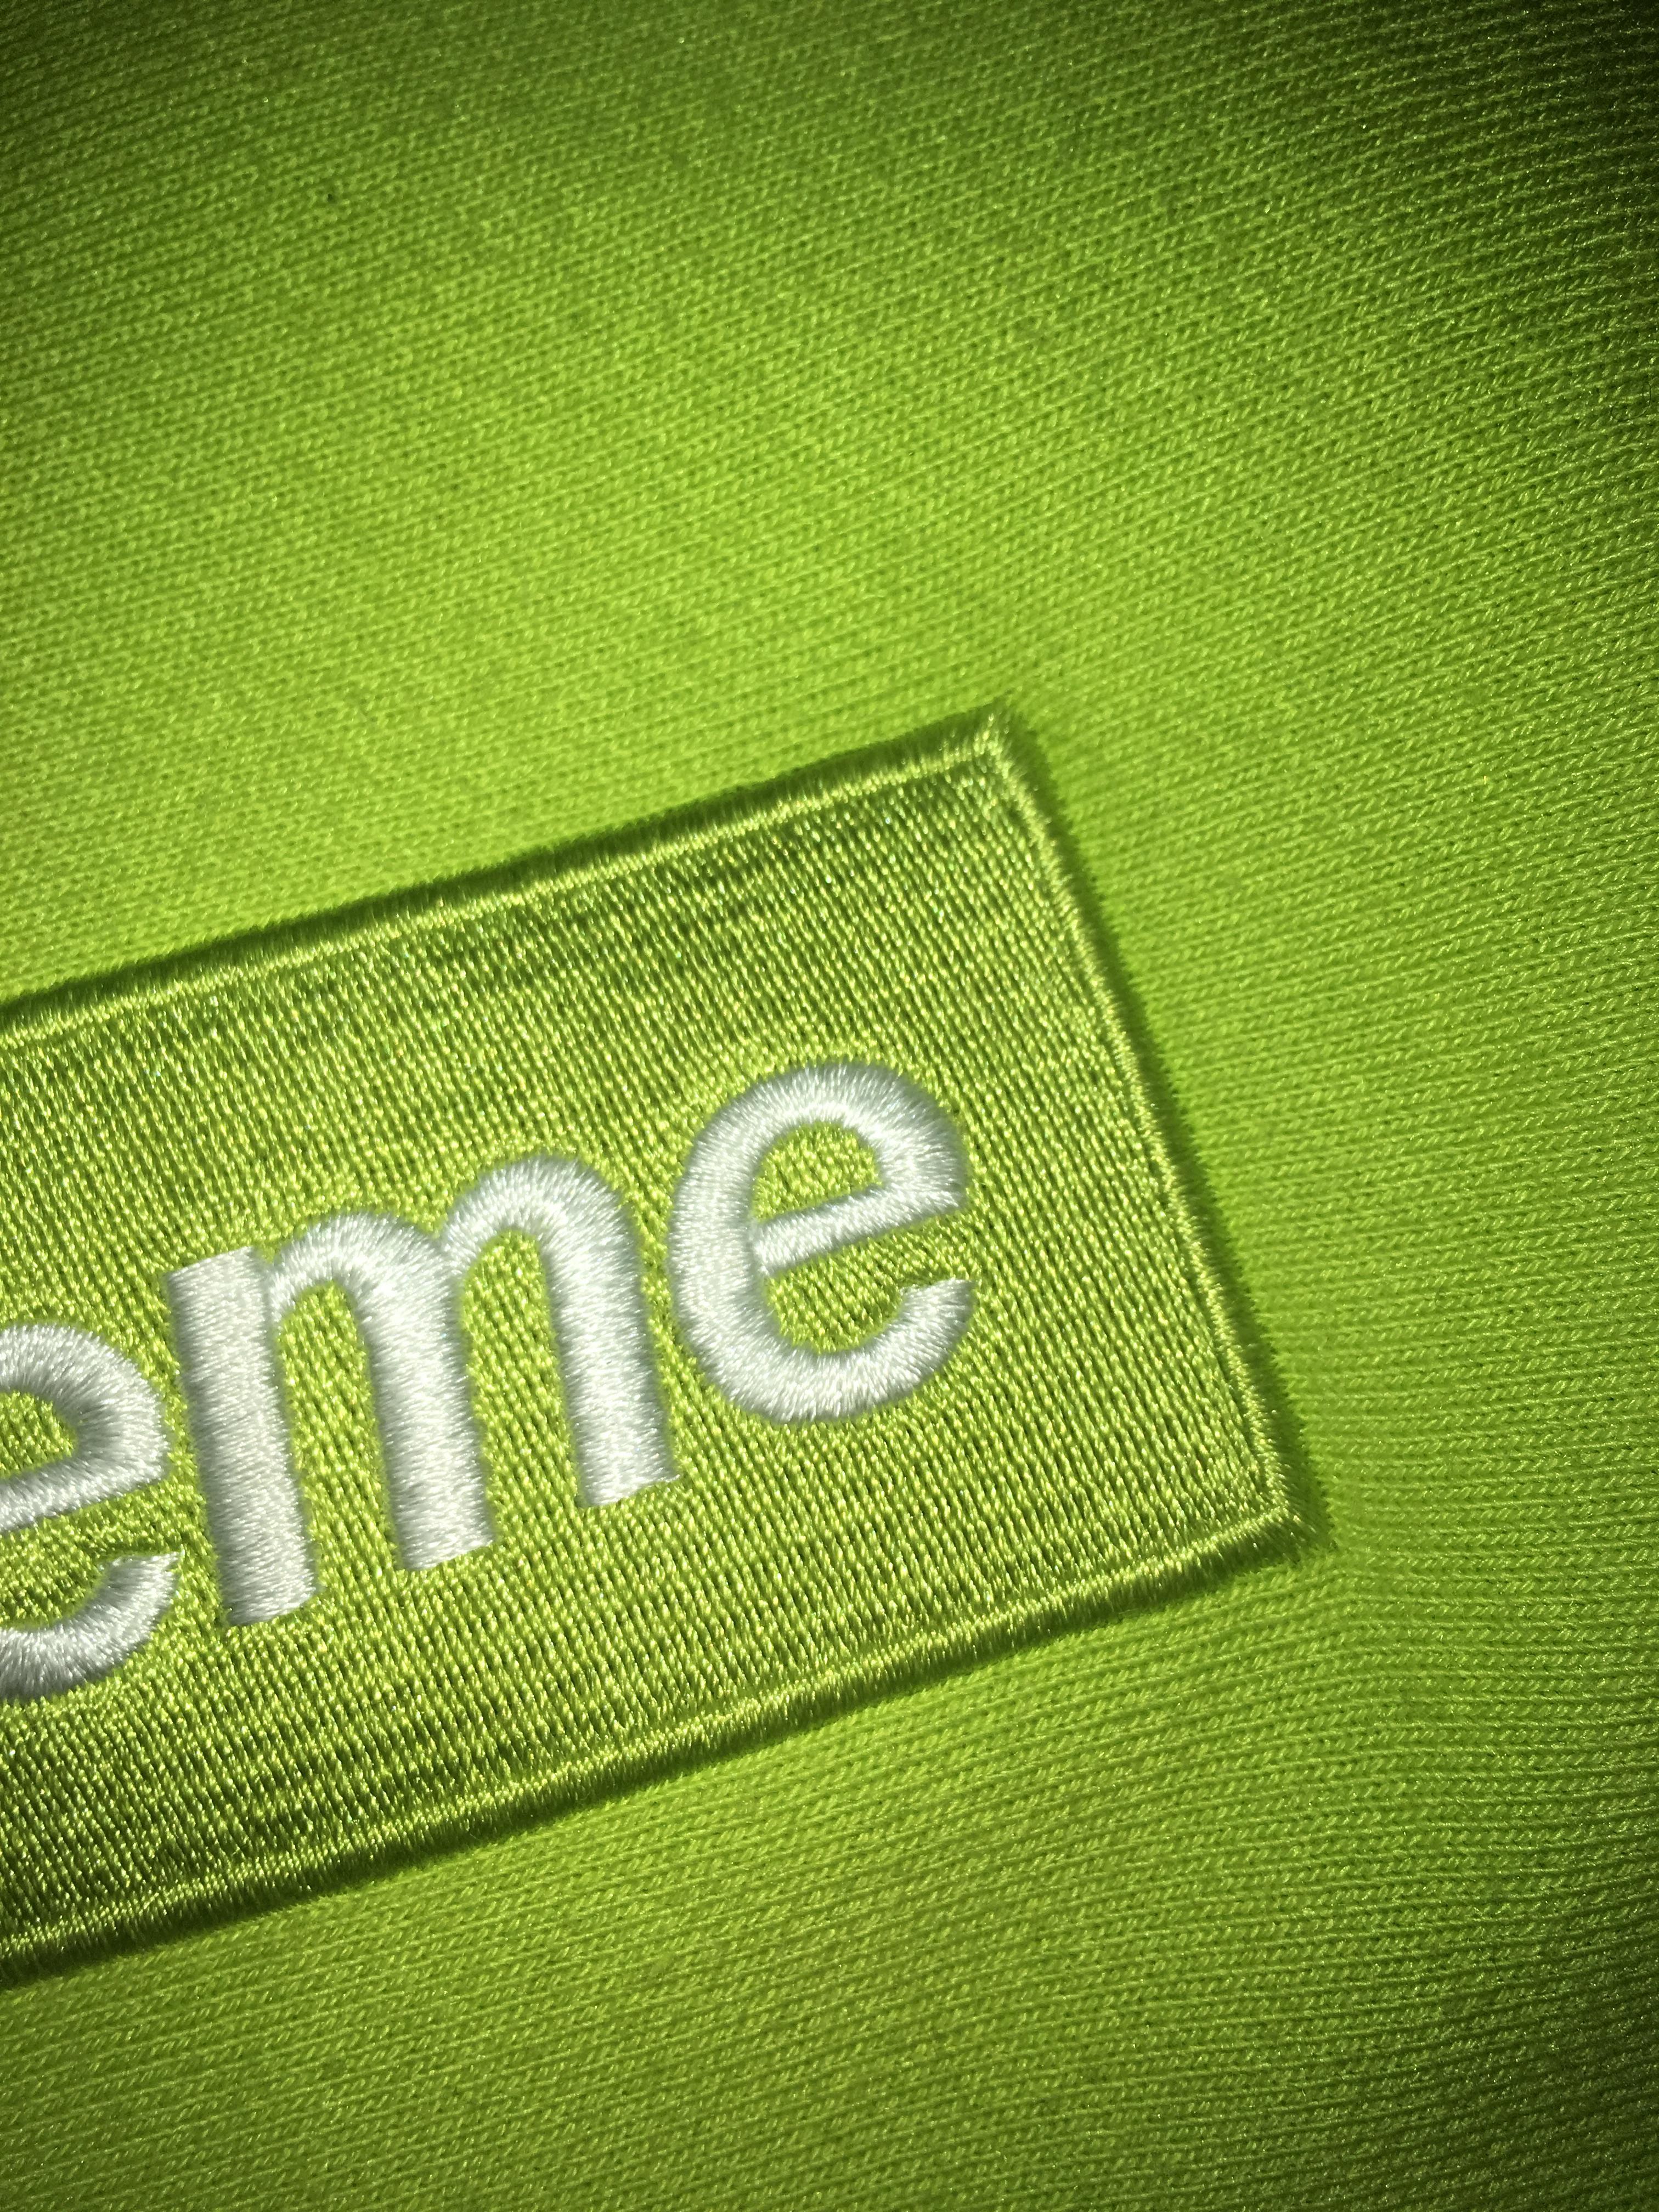 Acid Green Supreme Box Logo - supreme acid green box logo hoodie legit check - Album on Imgur